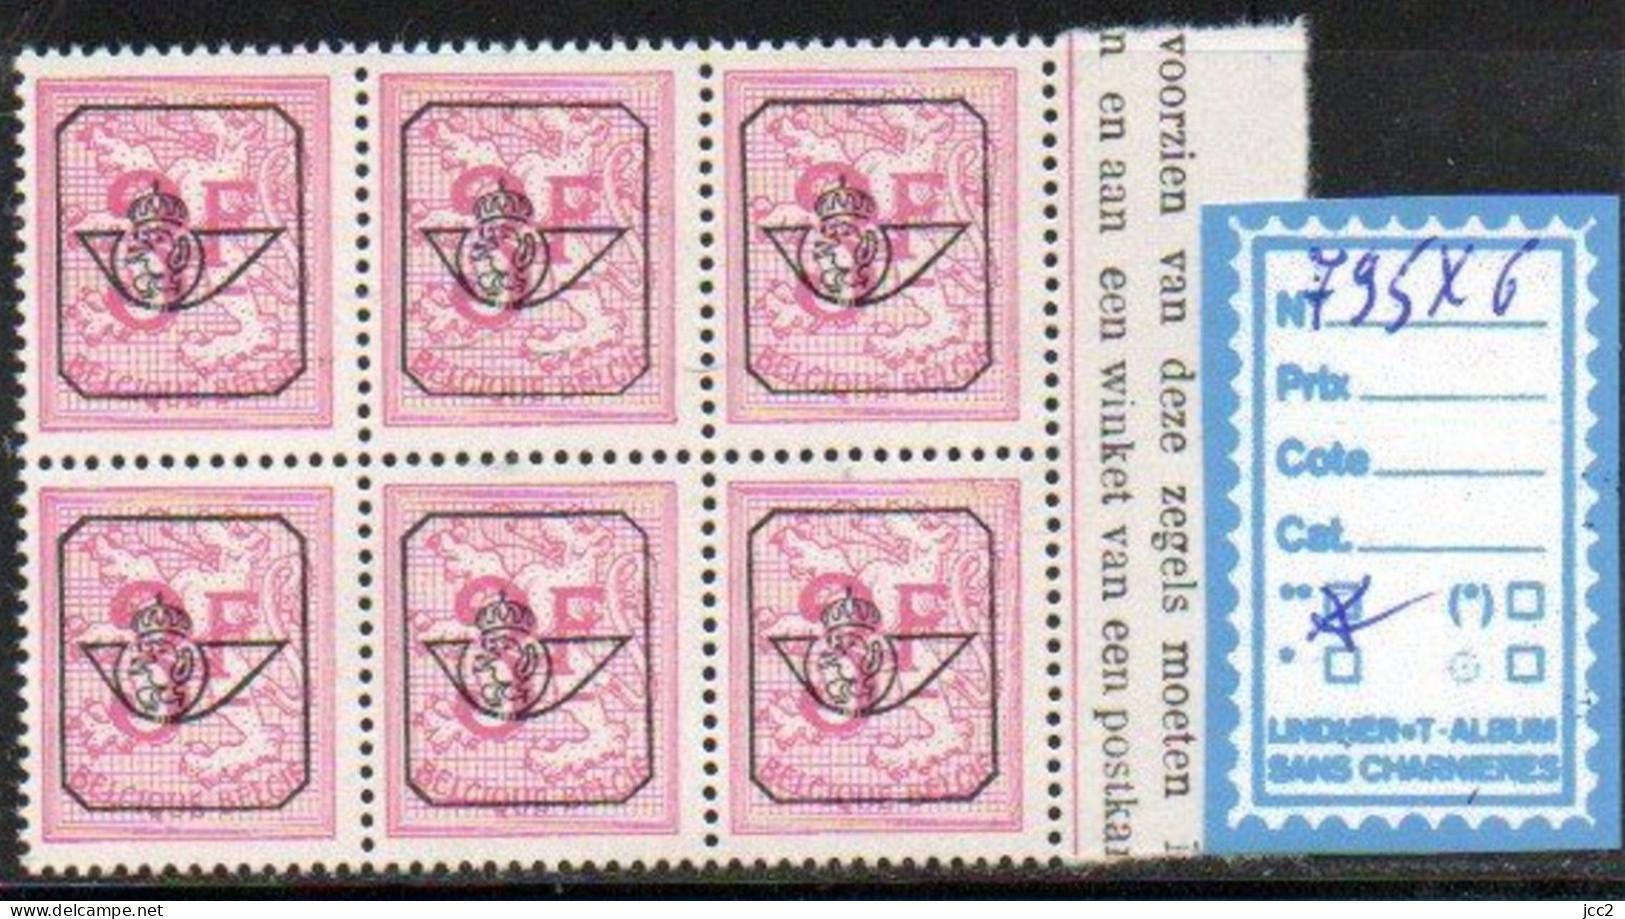 Préoblitéré 795X6 - Typo Precancels 1967-85 (New Numerals)